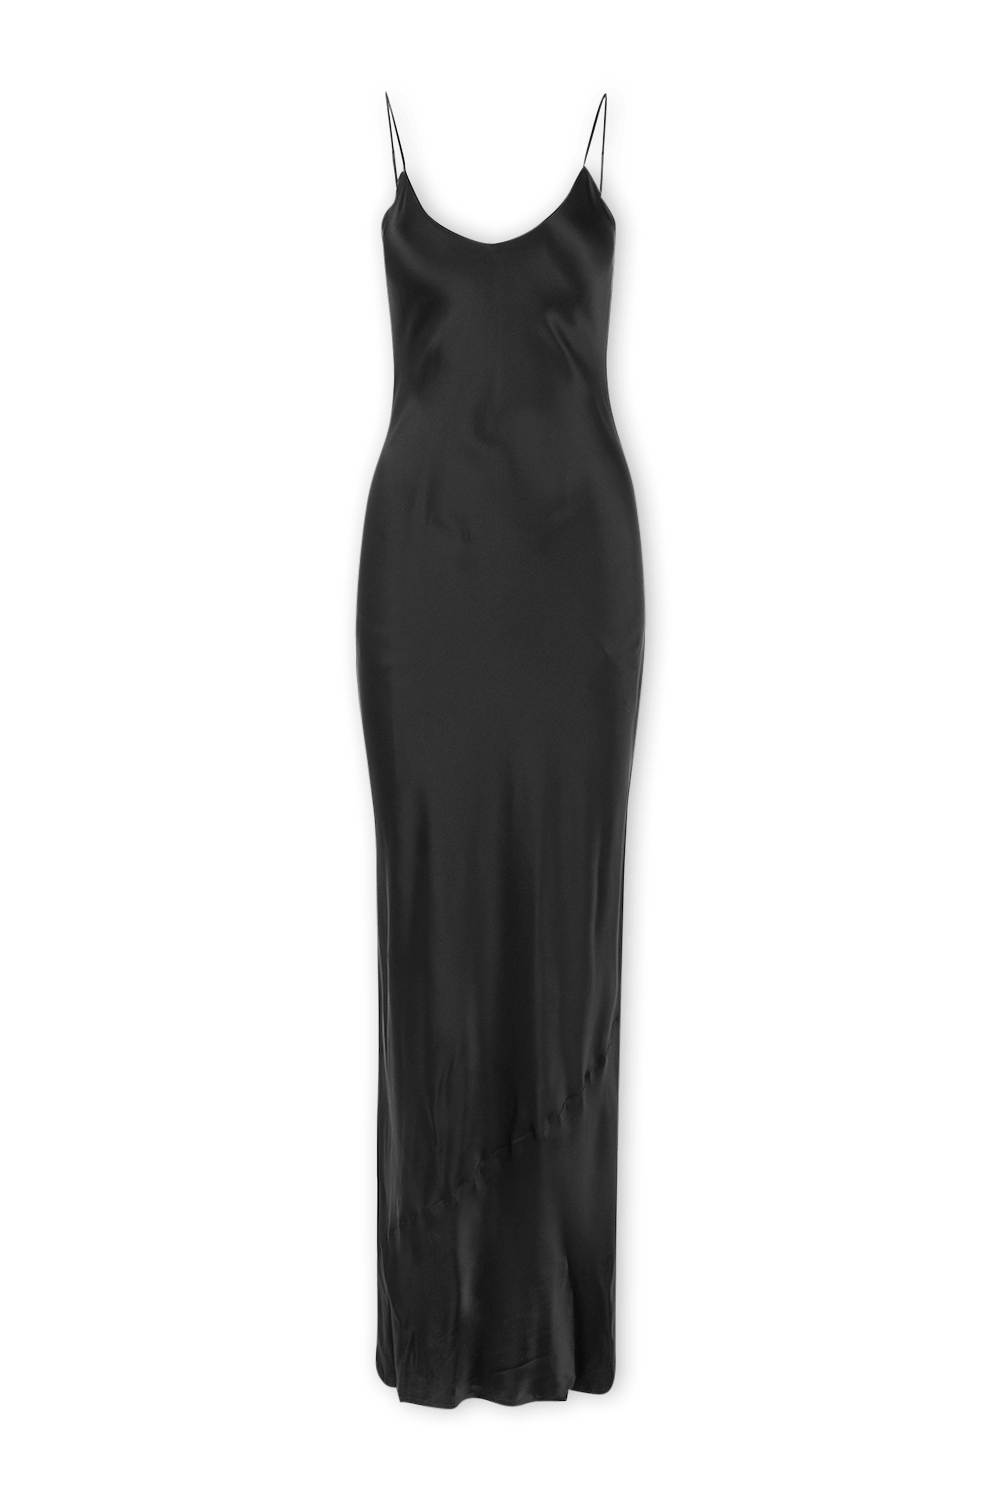 Cami Gown in Black NILI LOTAN